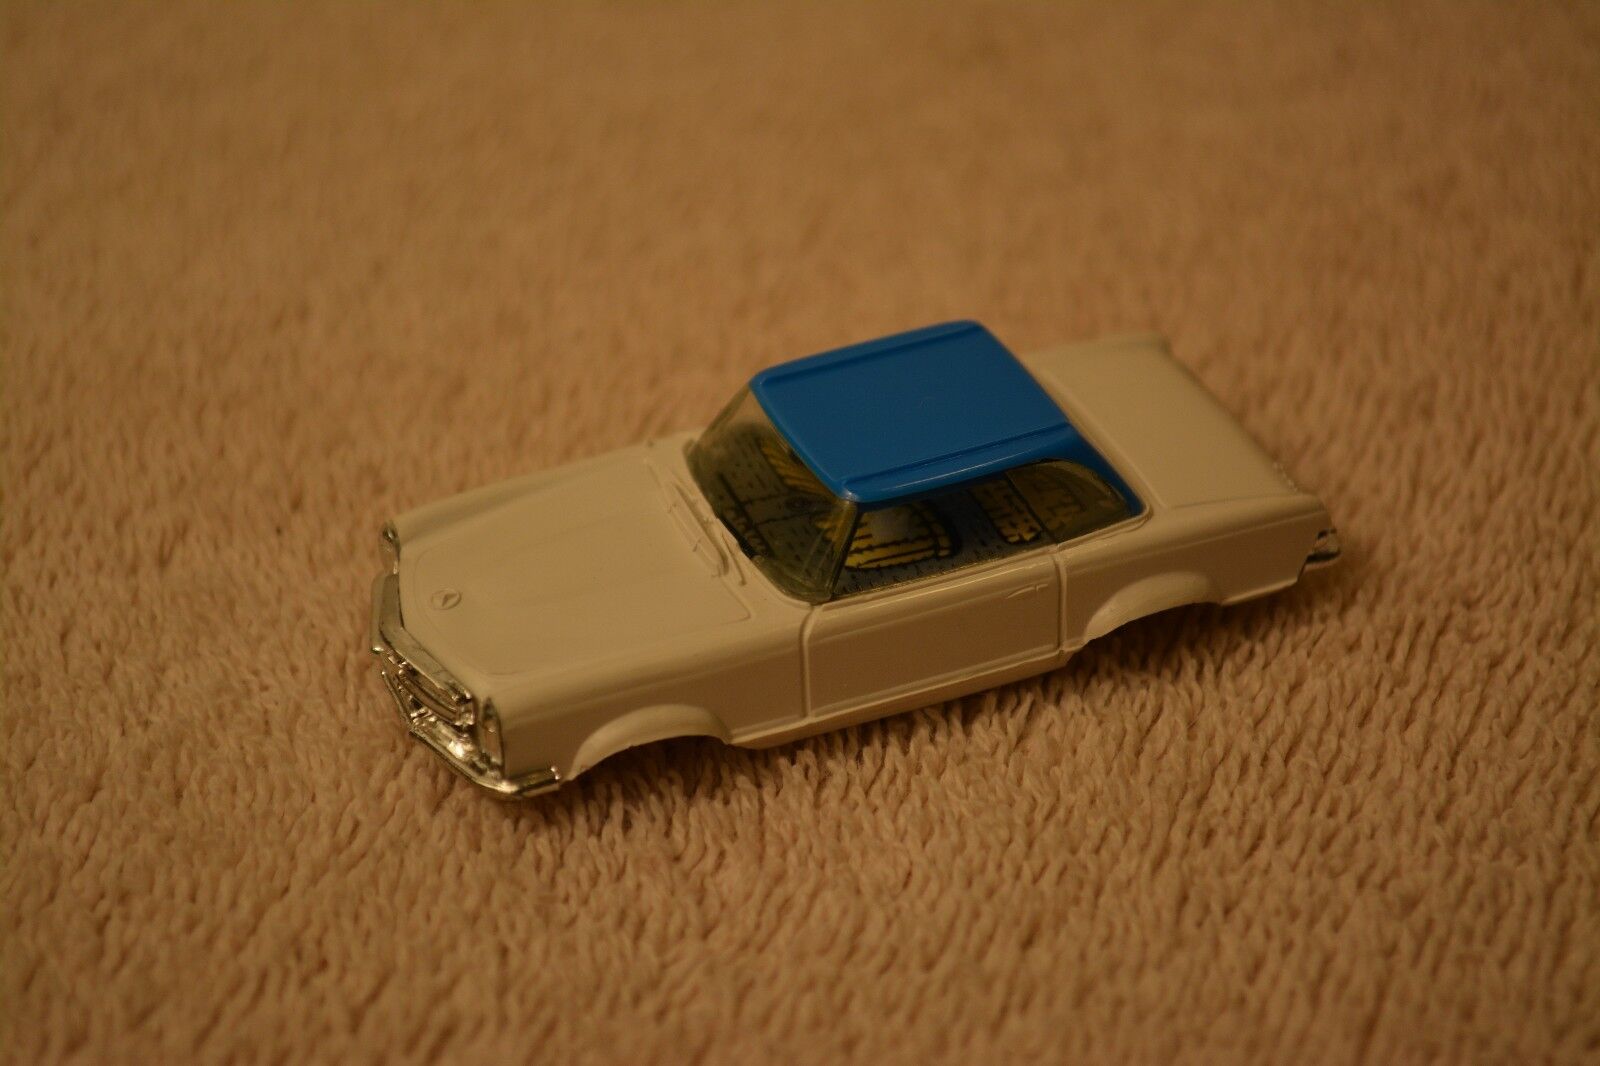 FALLER MERCEDES 230SL HARDTOP White with Lt Blue Roof HO Slot Car Body 4851 Mint